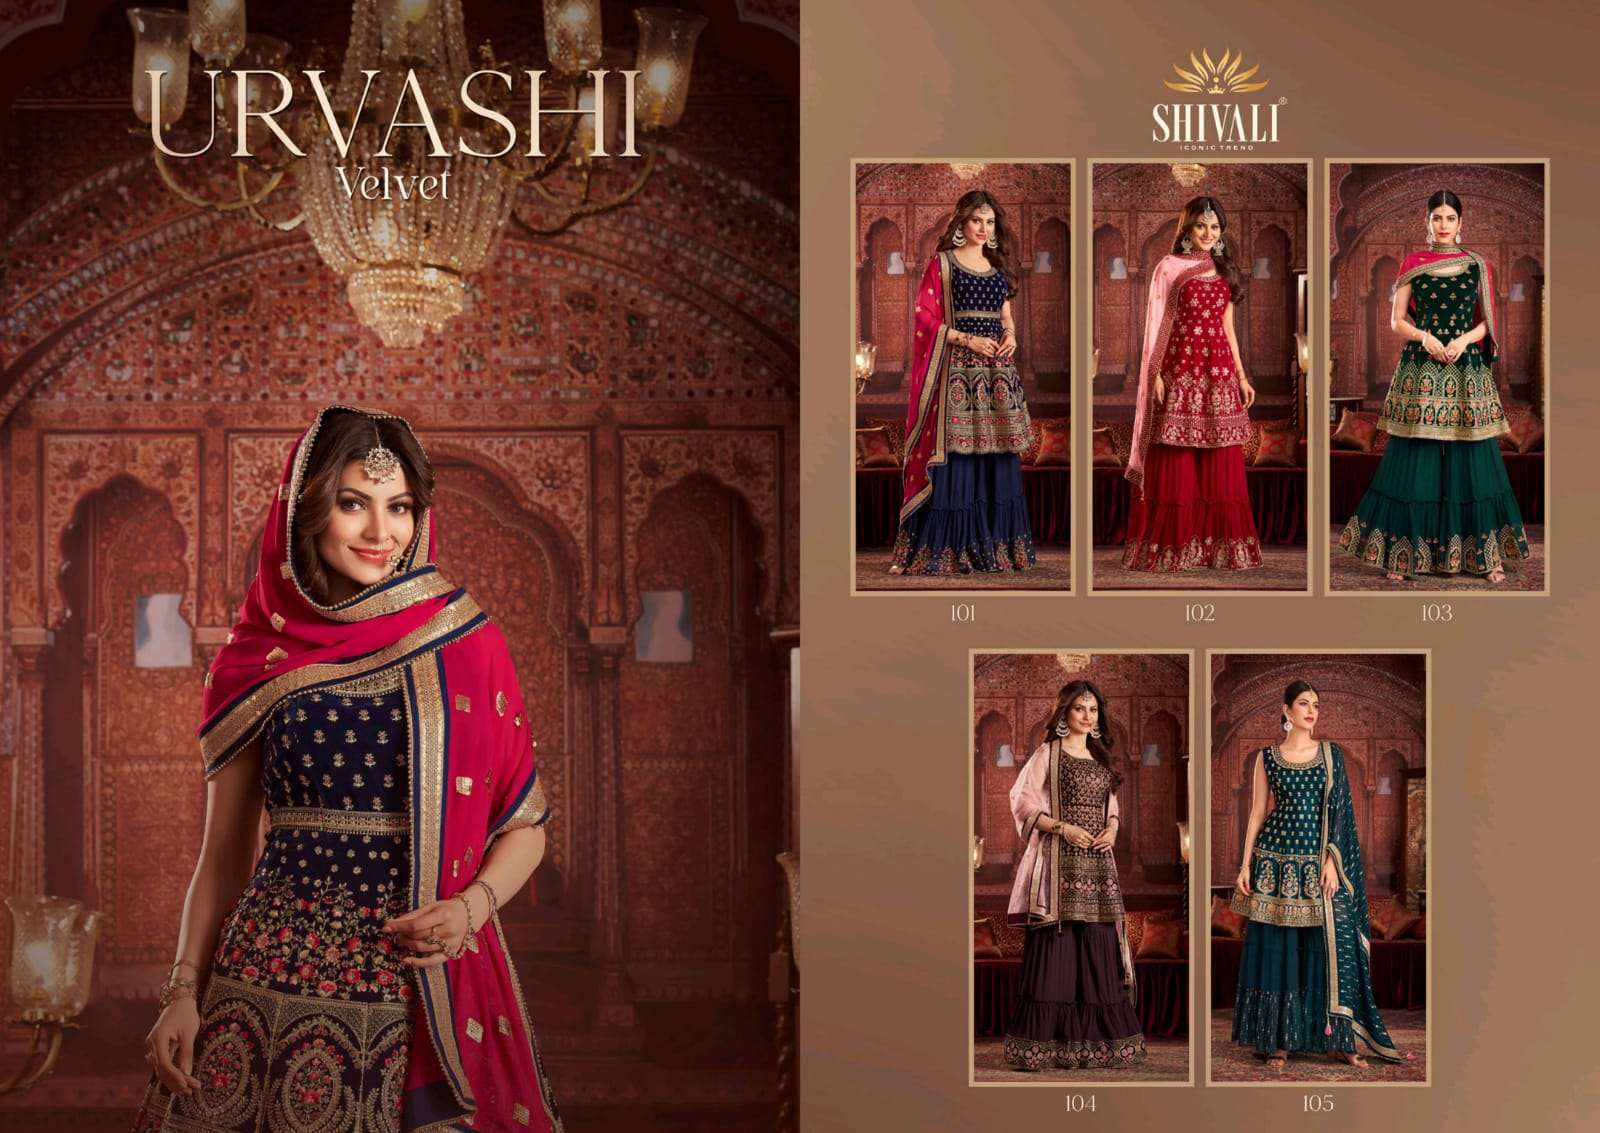 Shivali Fashion Urvashi Velvet 101-105